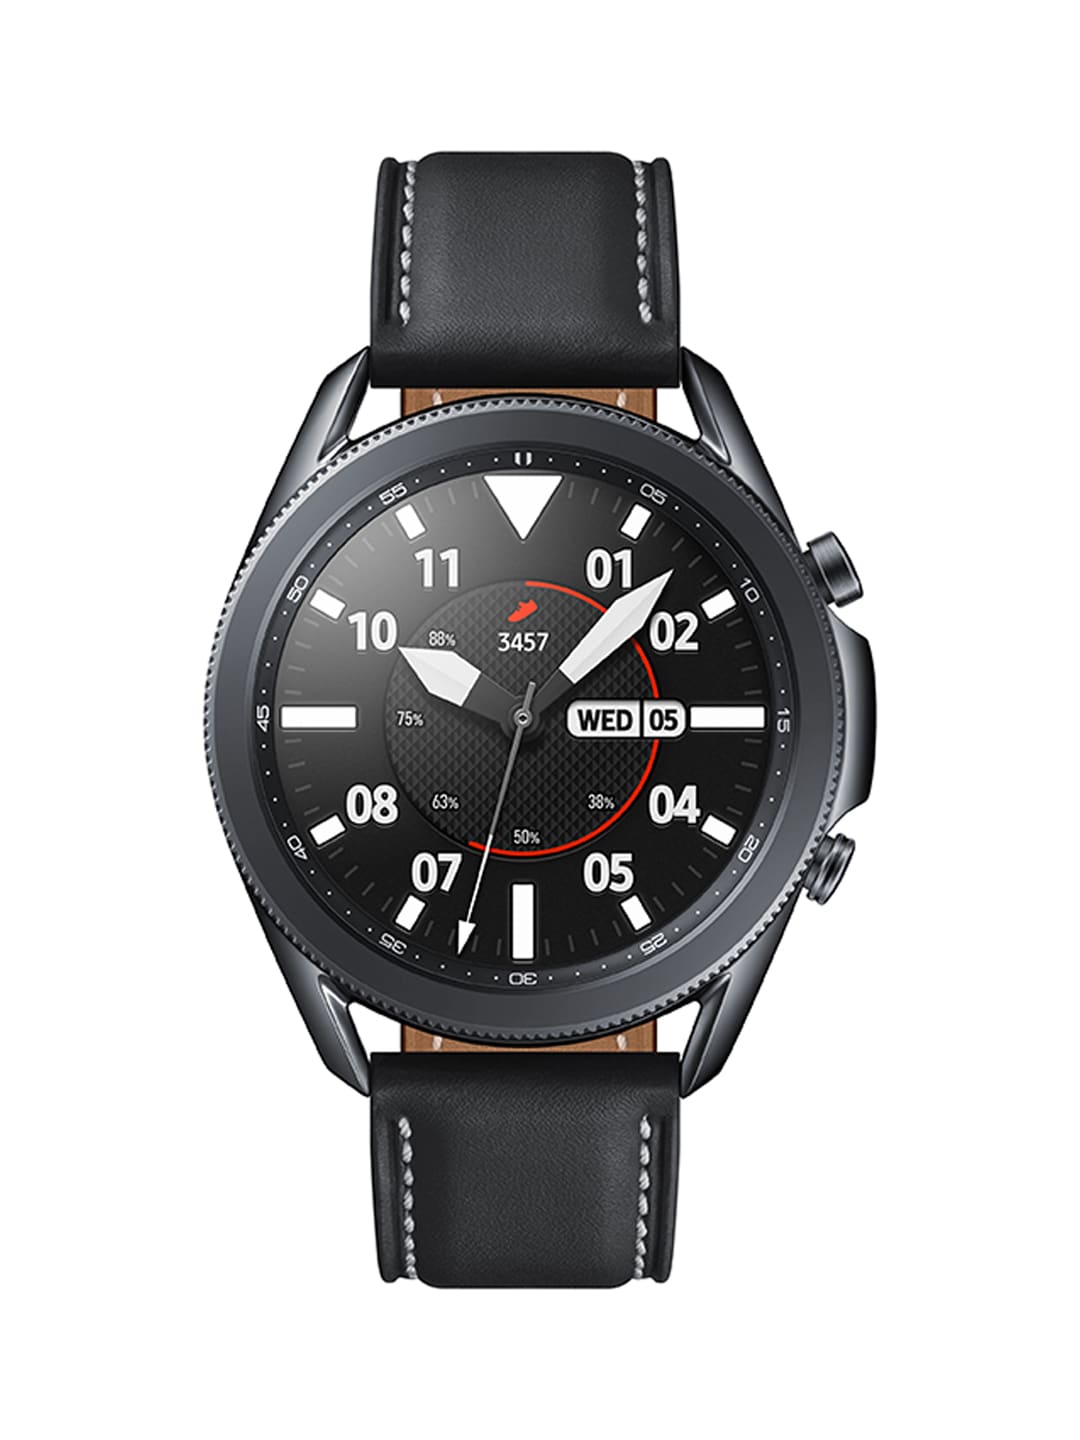 Samsung Galaxy Watch3 Bluetooth Smart Watch - Mystic Black SM-R840NZKAINU Price in India